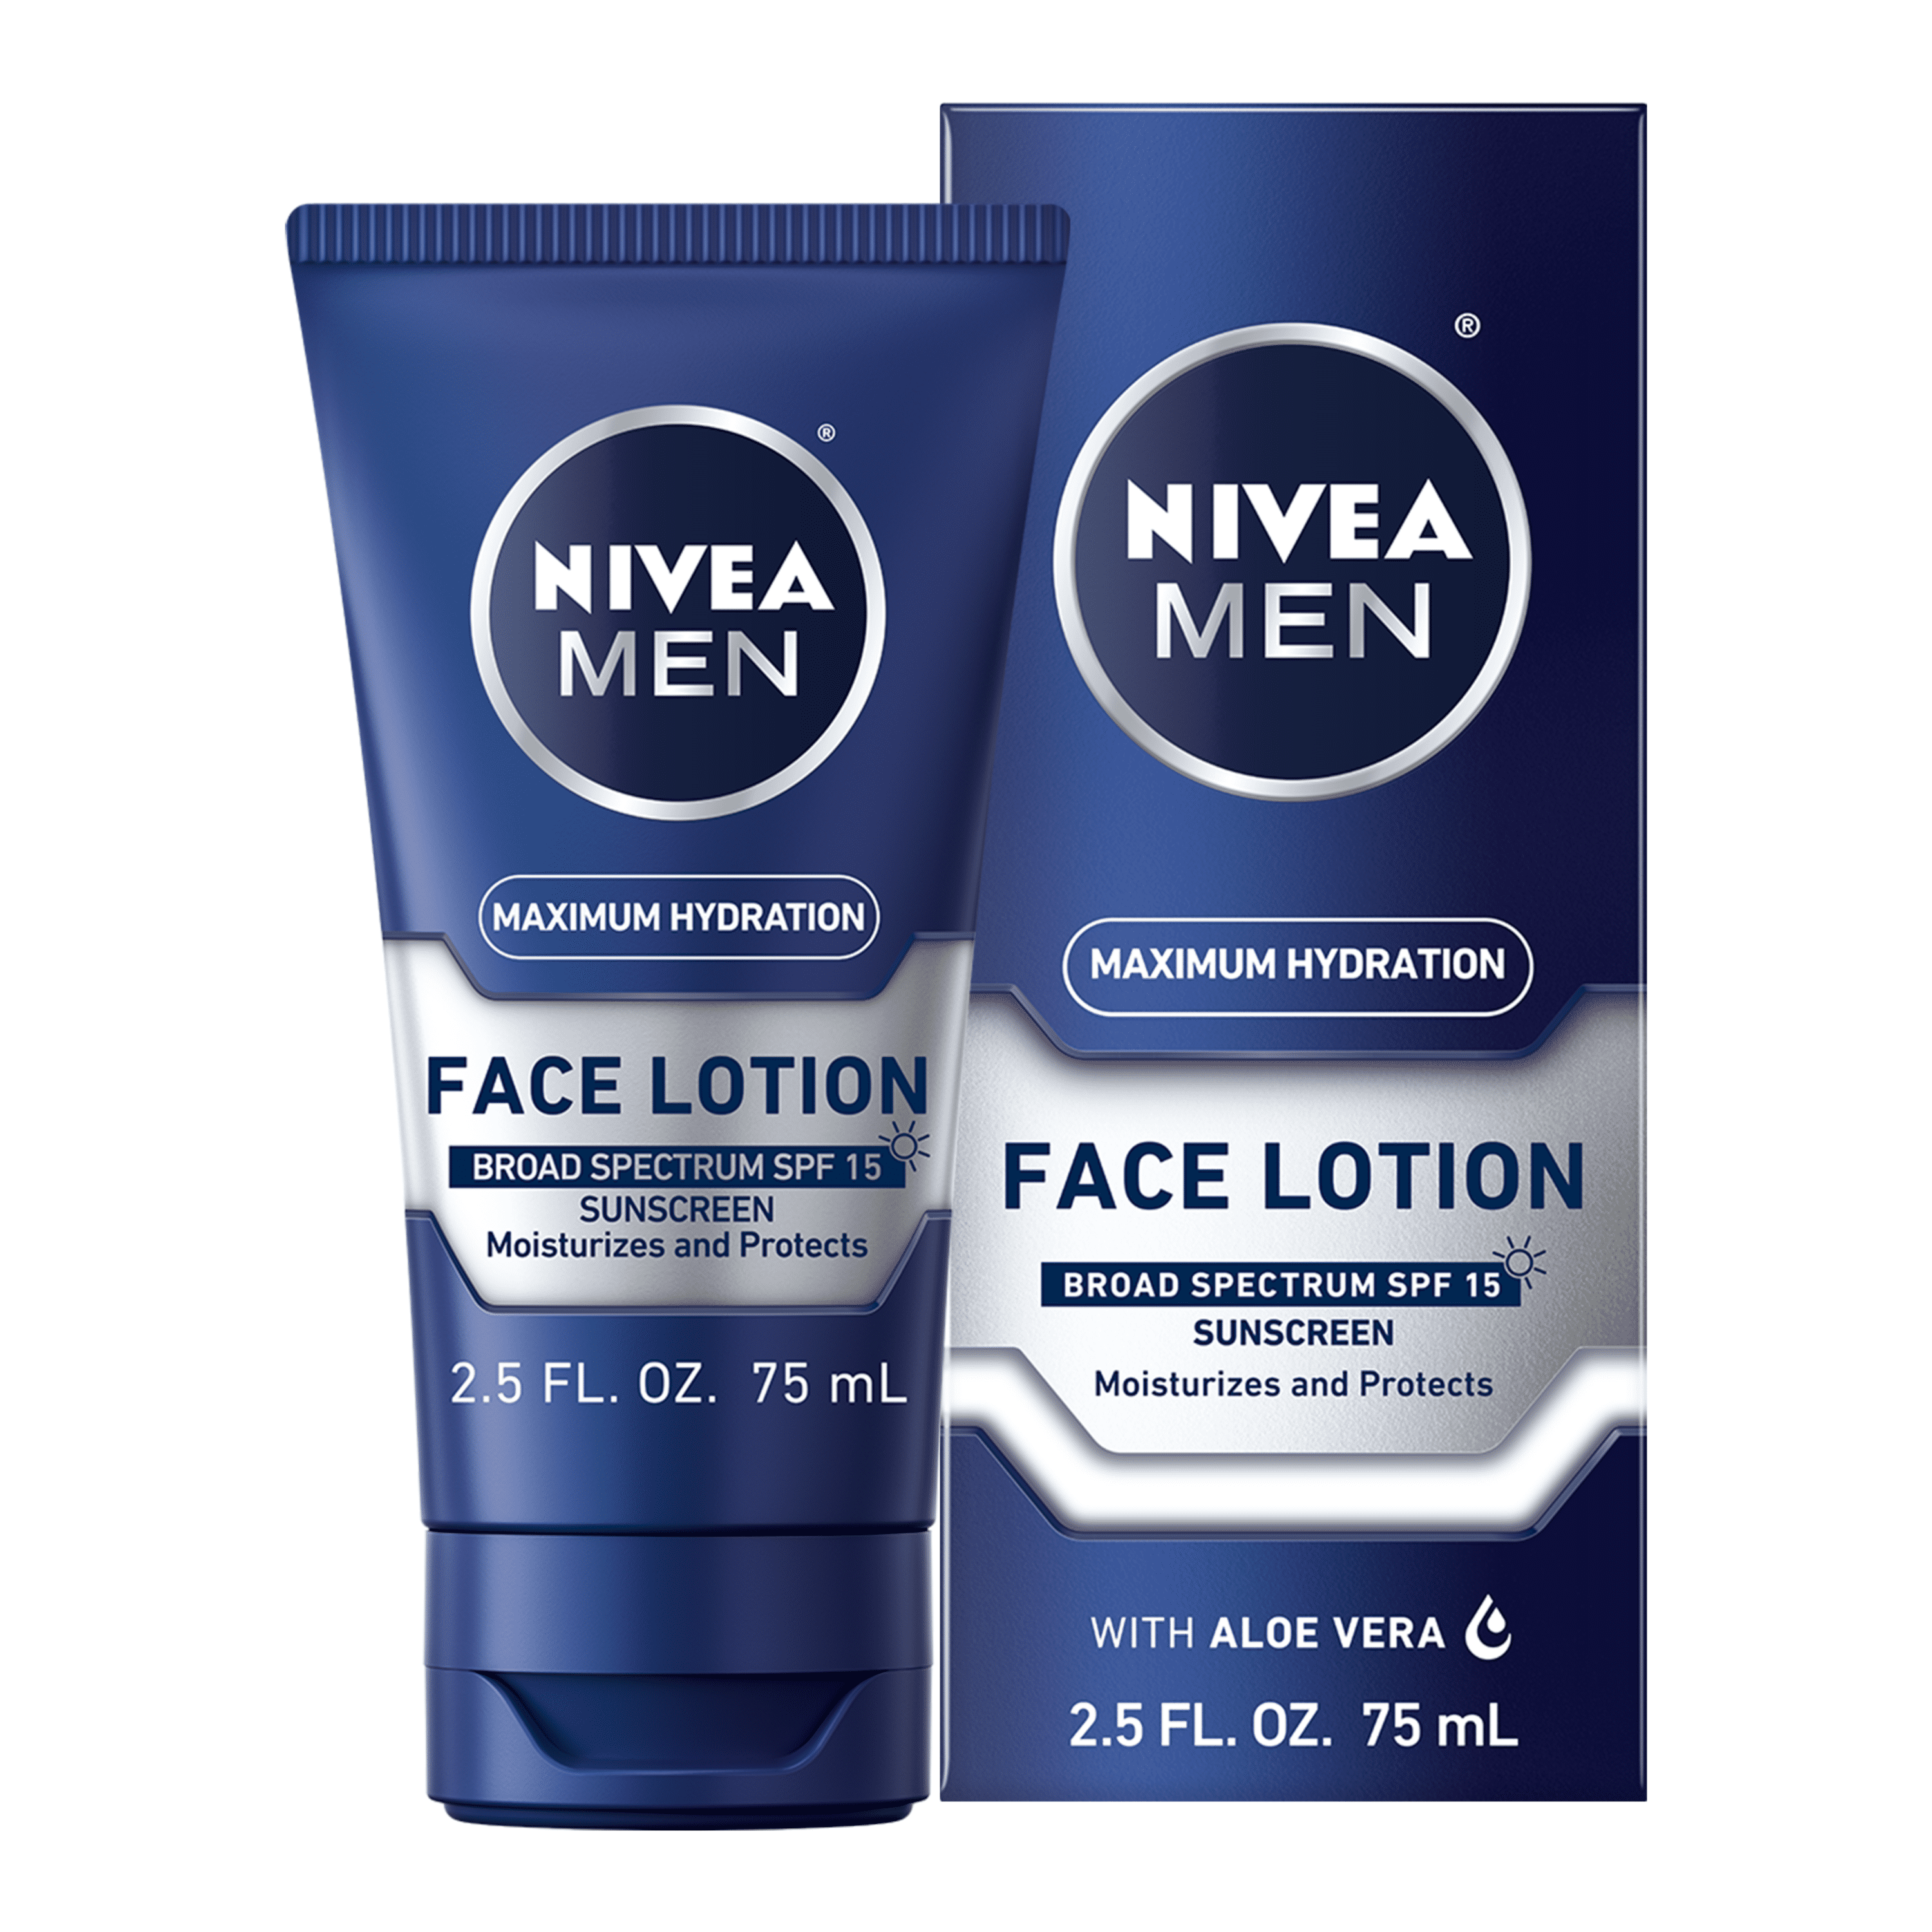 NIVEA MEN Maximum Hydration Face Lotion with Broad Spectrum SPF 15 Sunscreen, 2.5 Fl Oz Tube